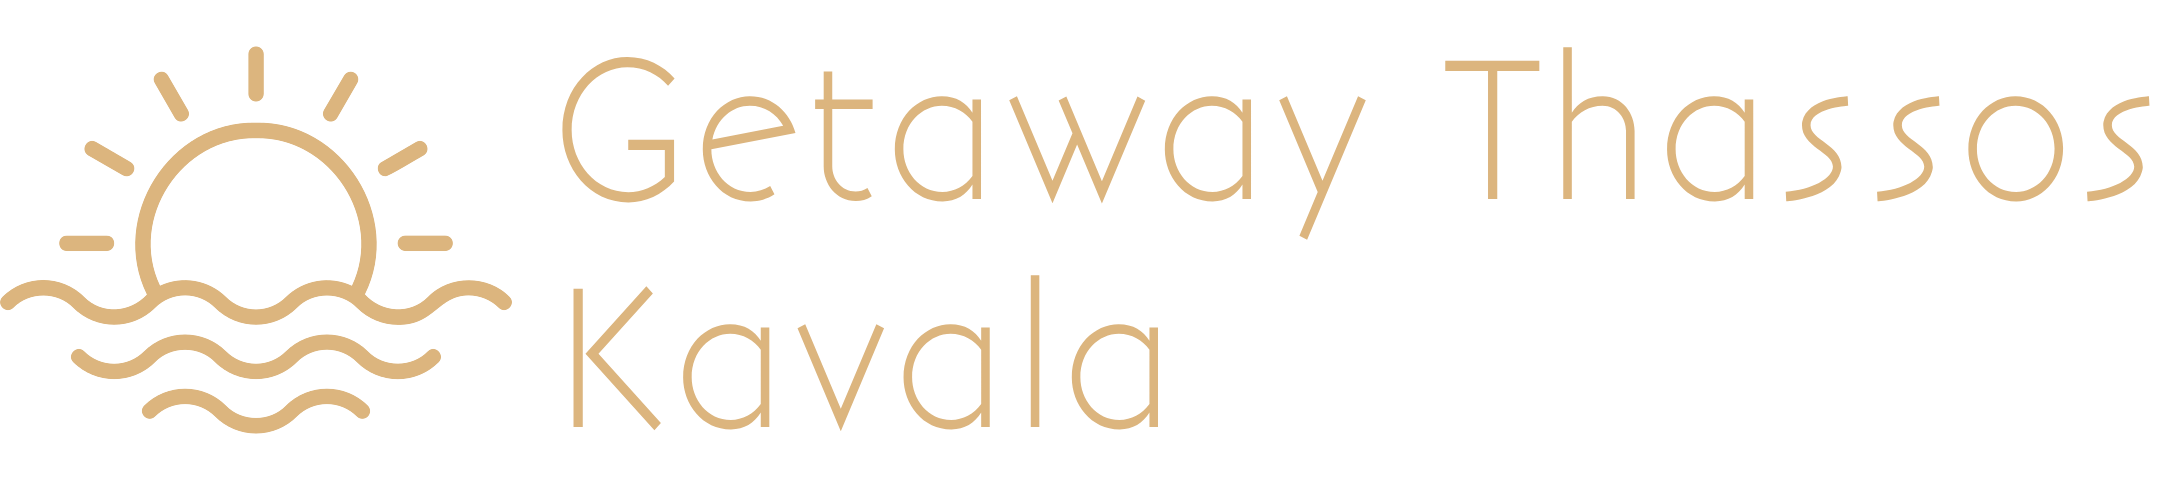 Getaway Thassos Kavala | Wedding Services - Getaway Thassos Kavala